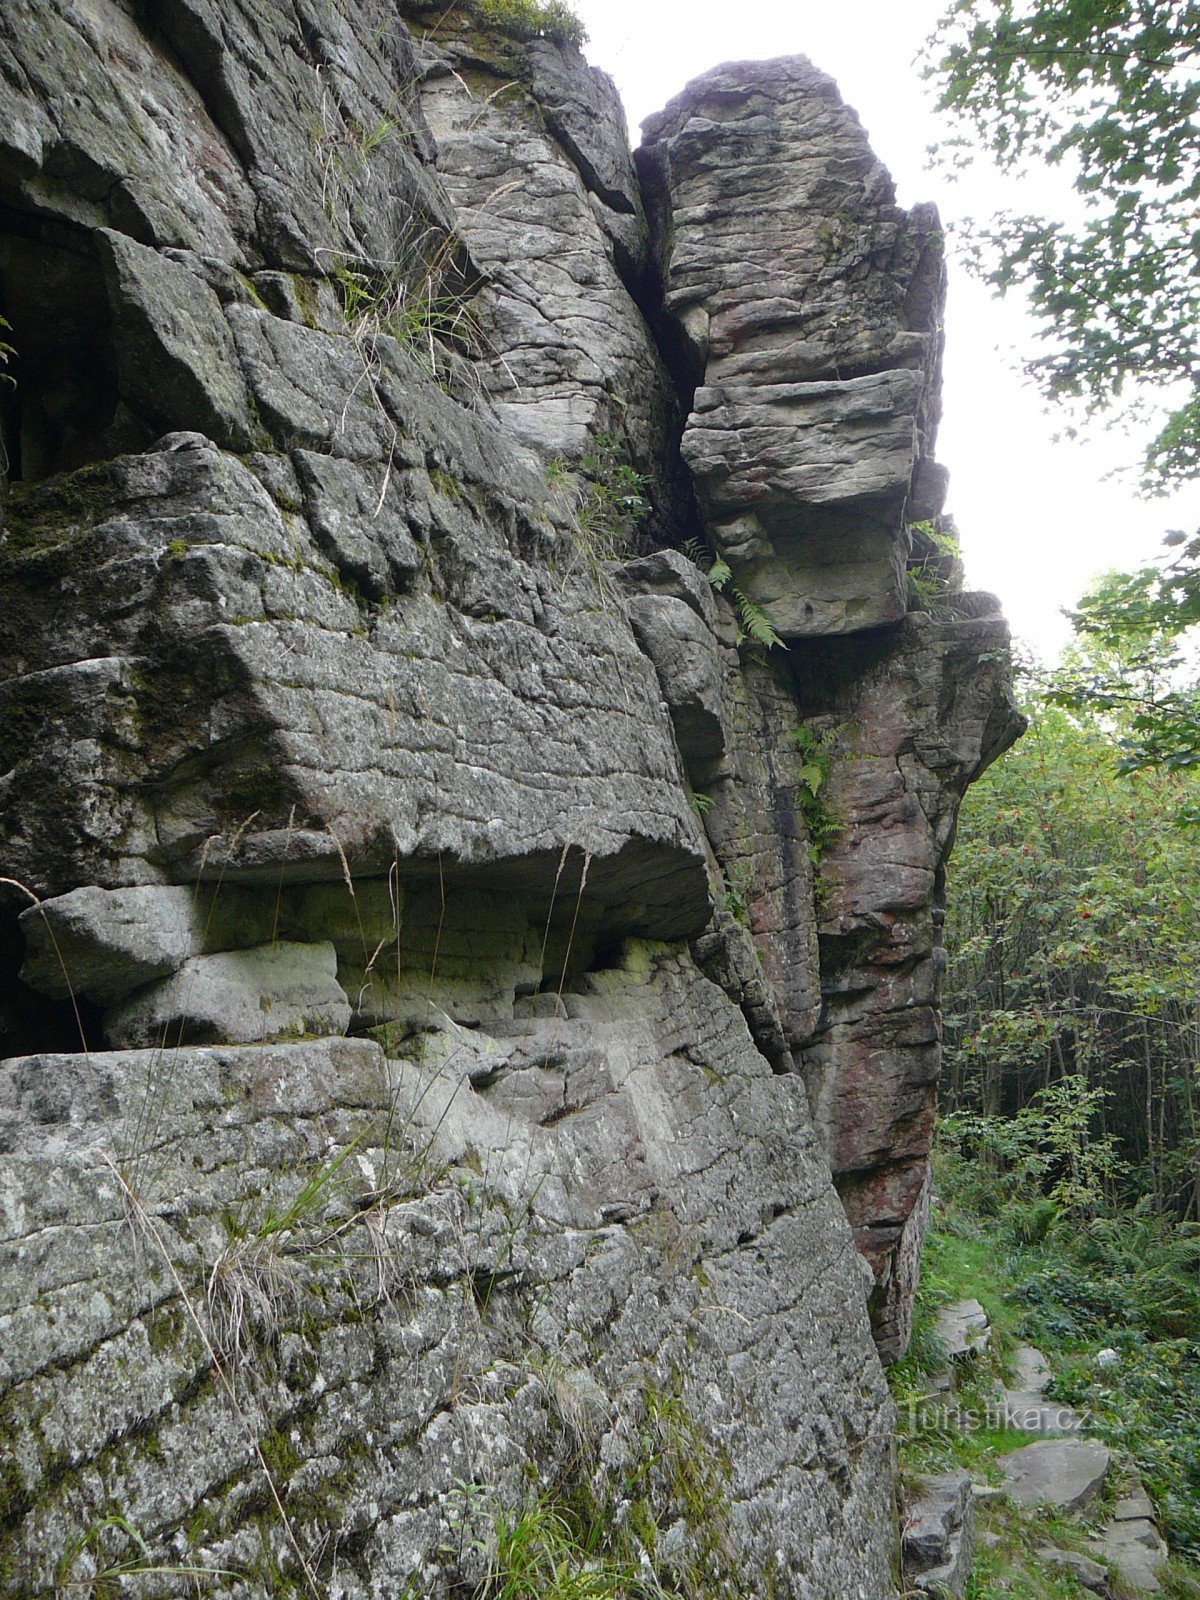 Lower rocks on Mazák